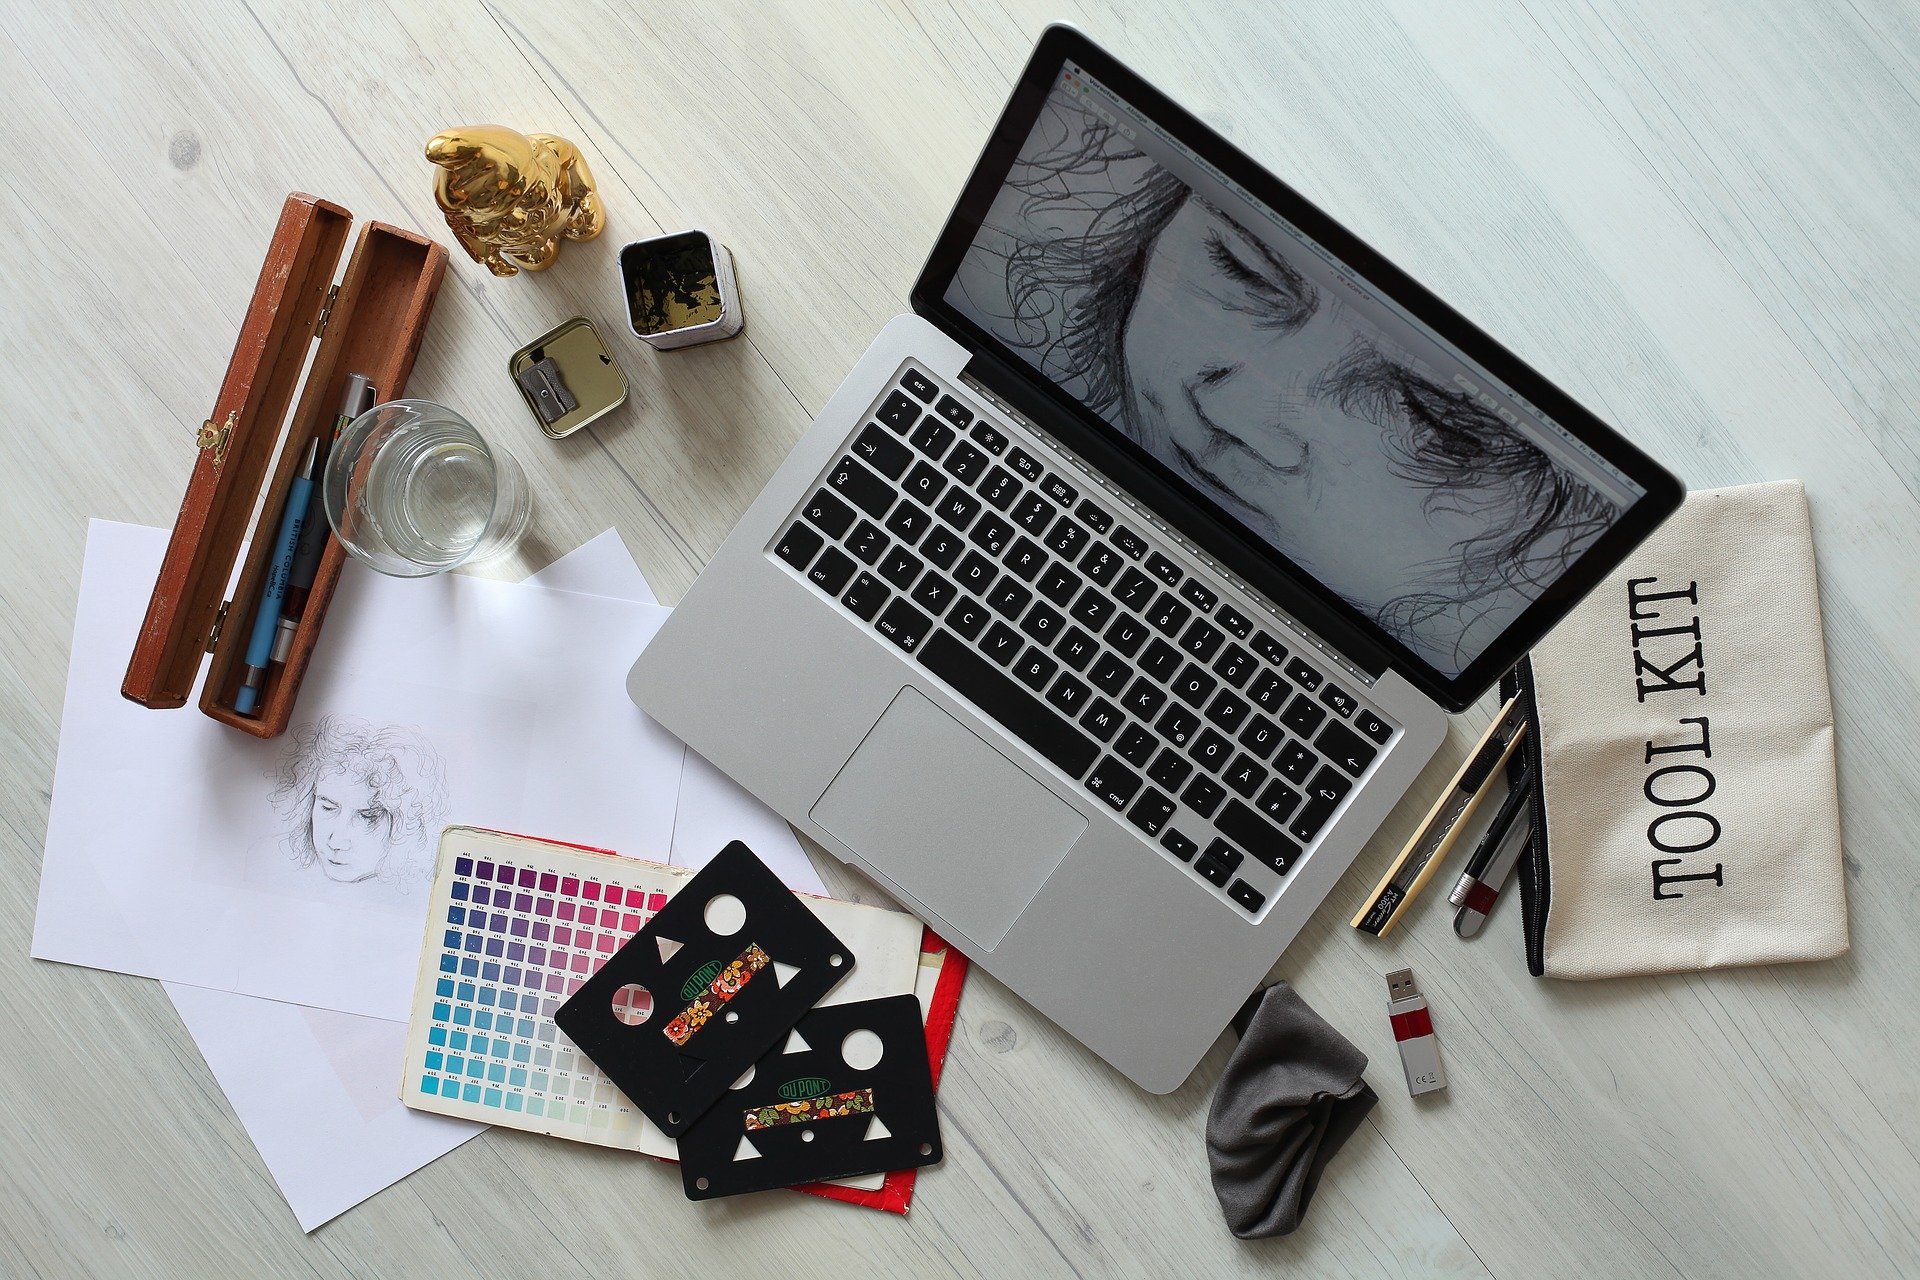 Desk with digital artwork and art materials